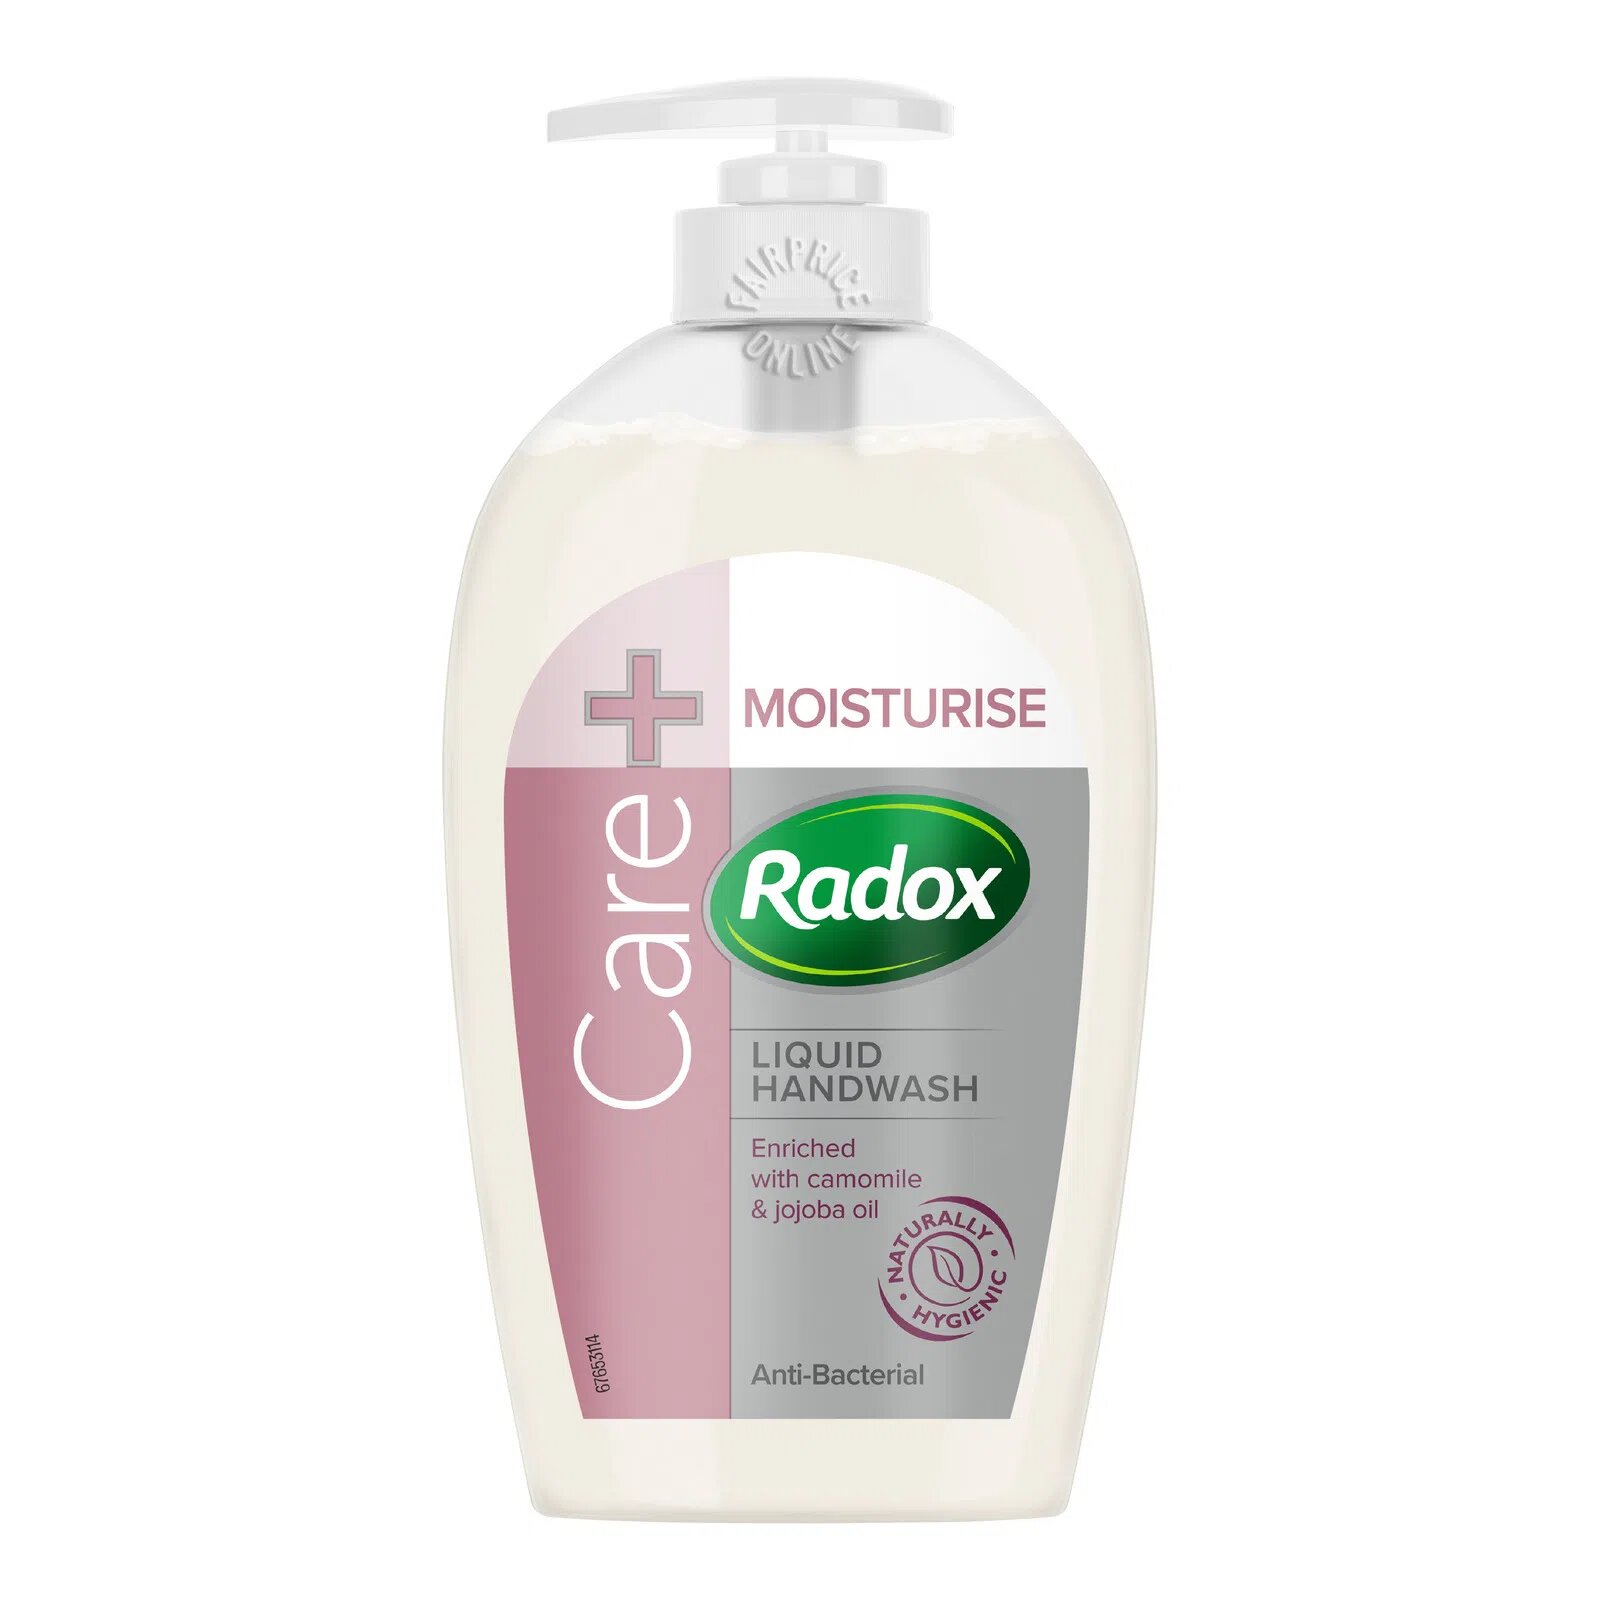 Radox Anti-Bacterial Handwash - Moisture